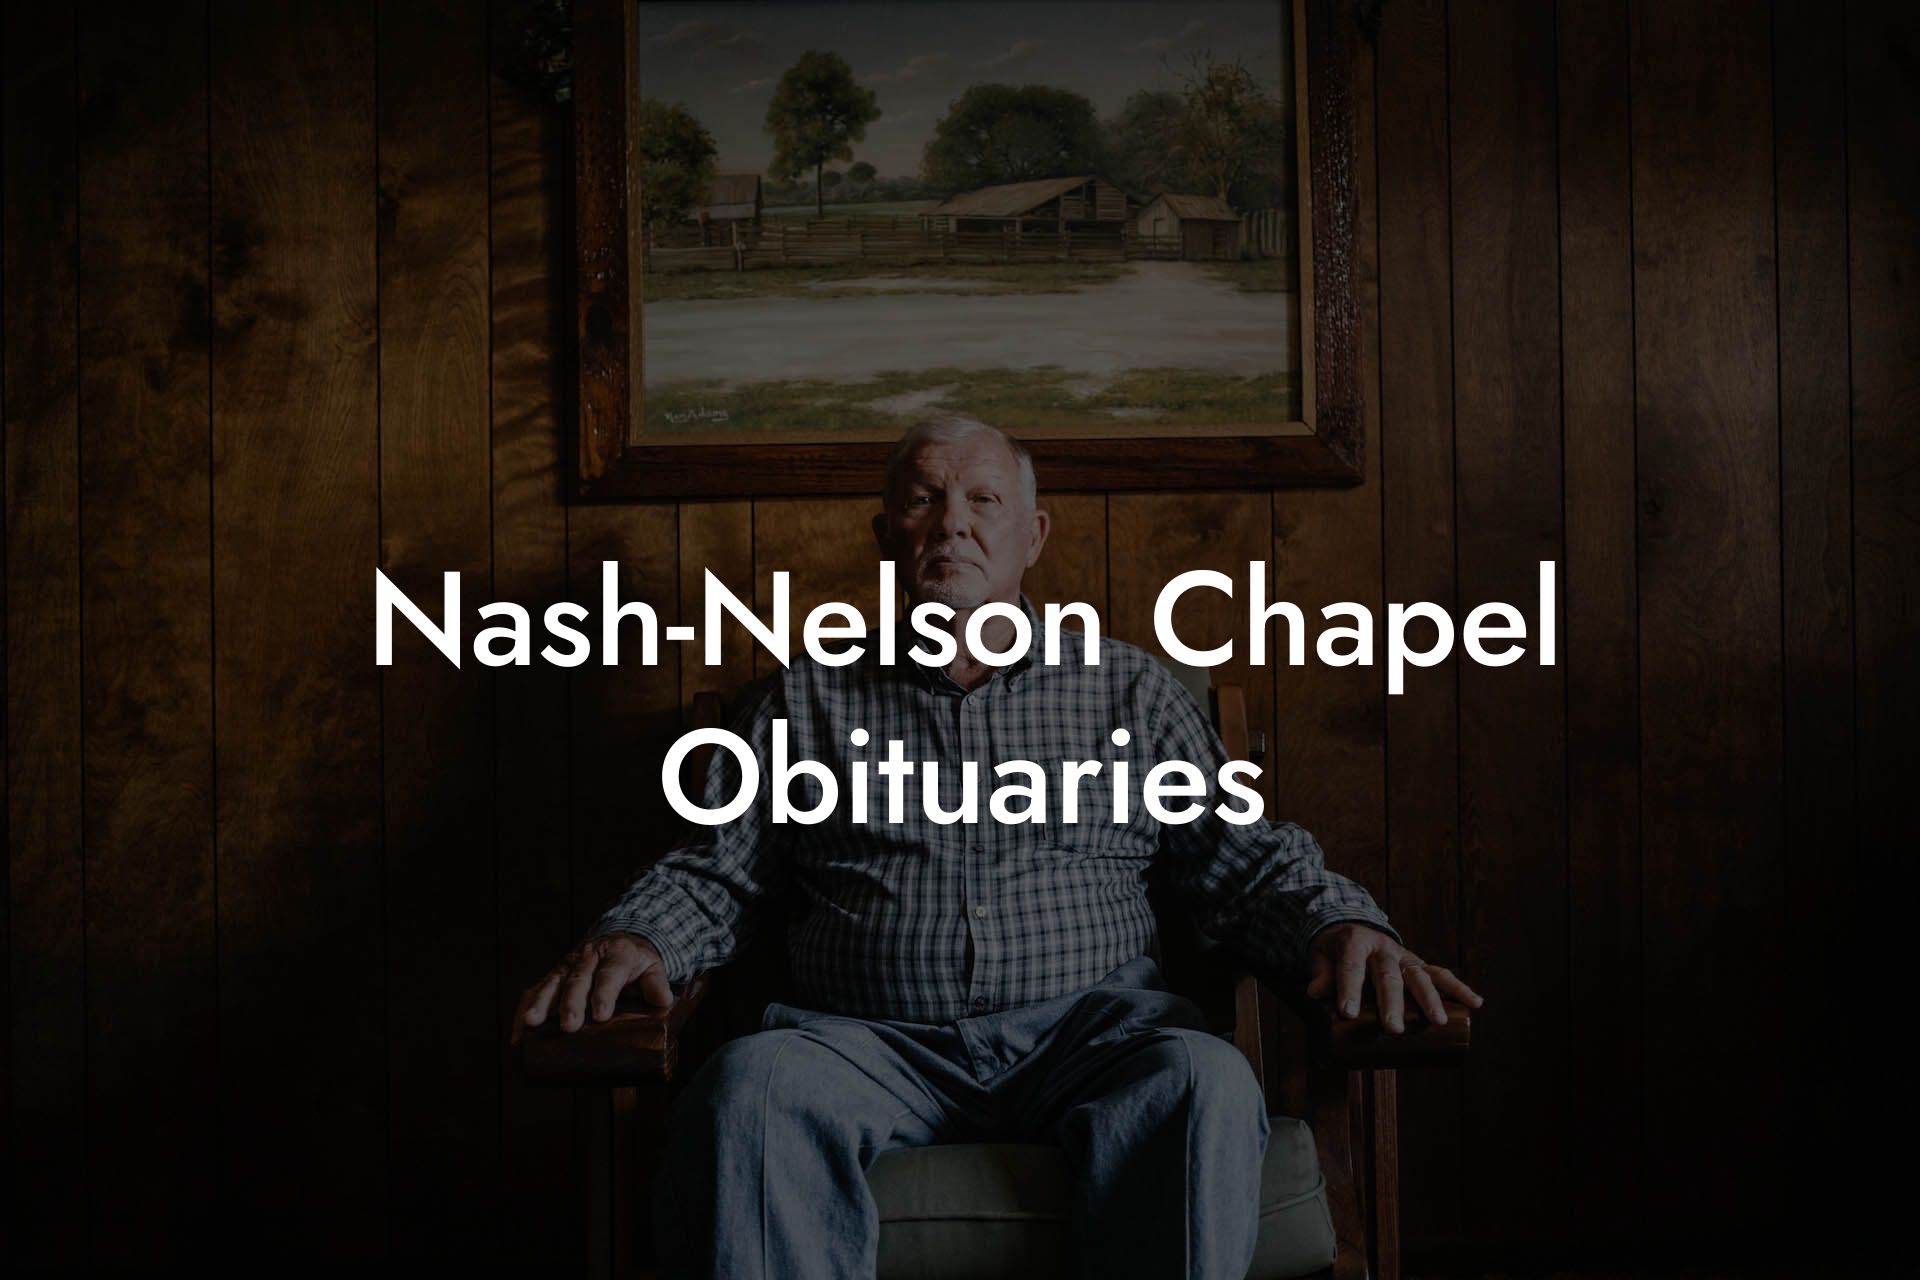 Nash-Nelson Chapel Obituaries